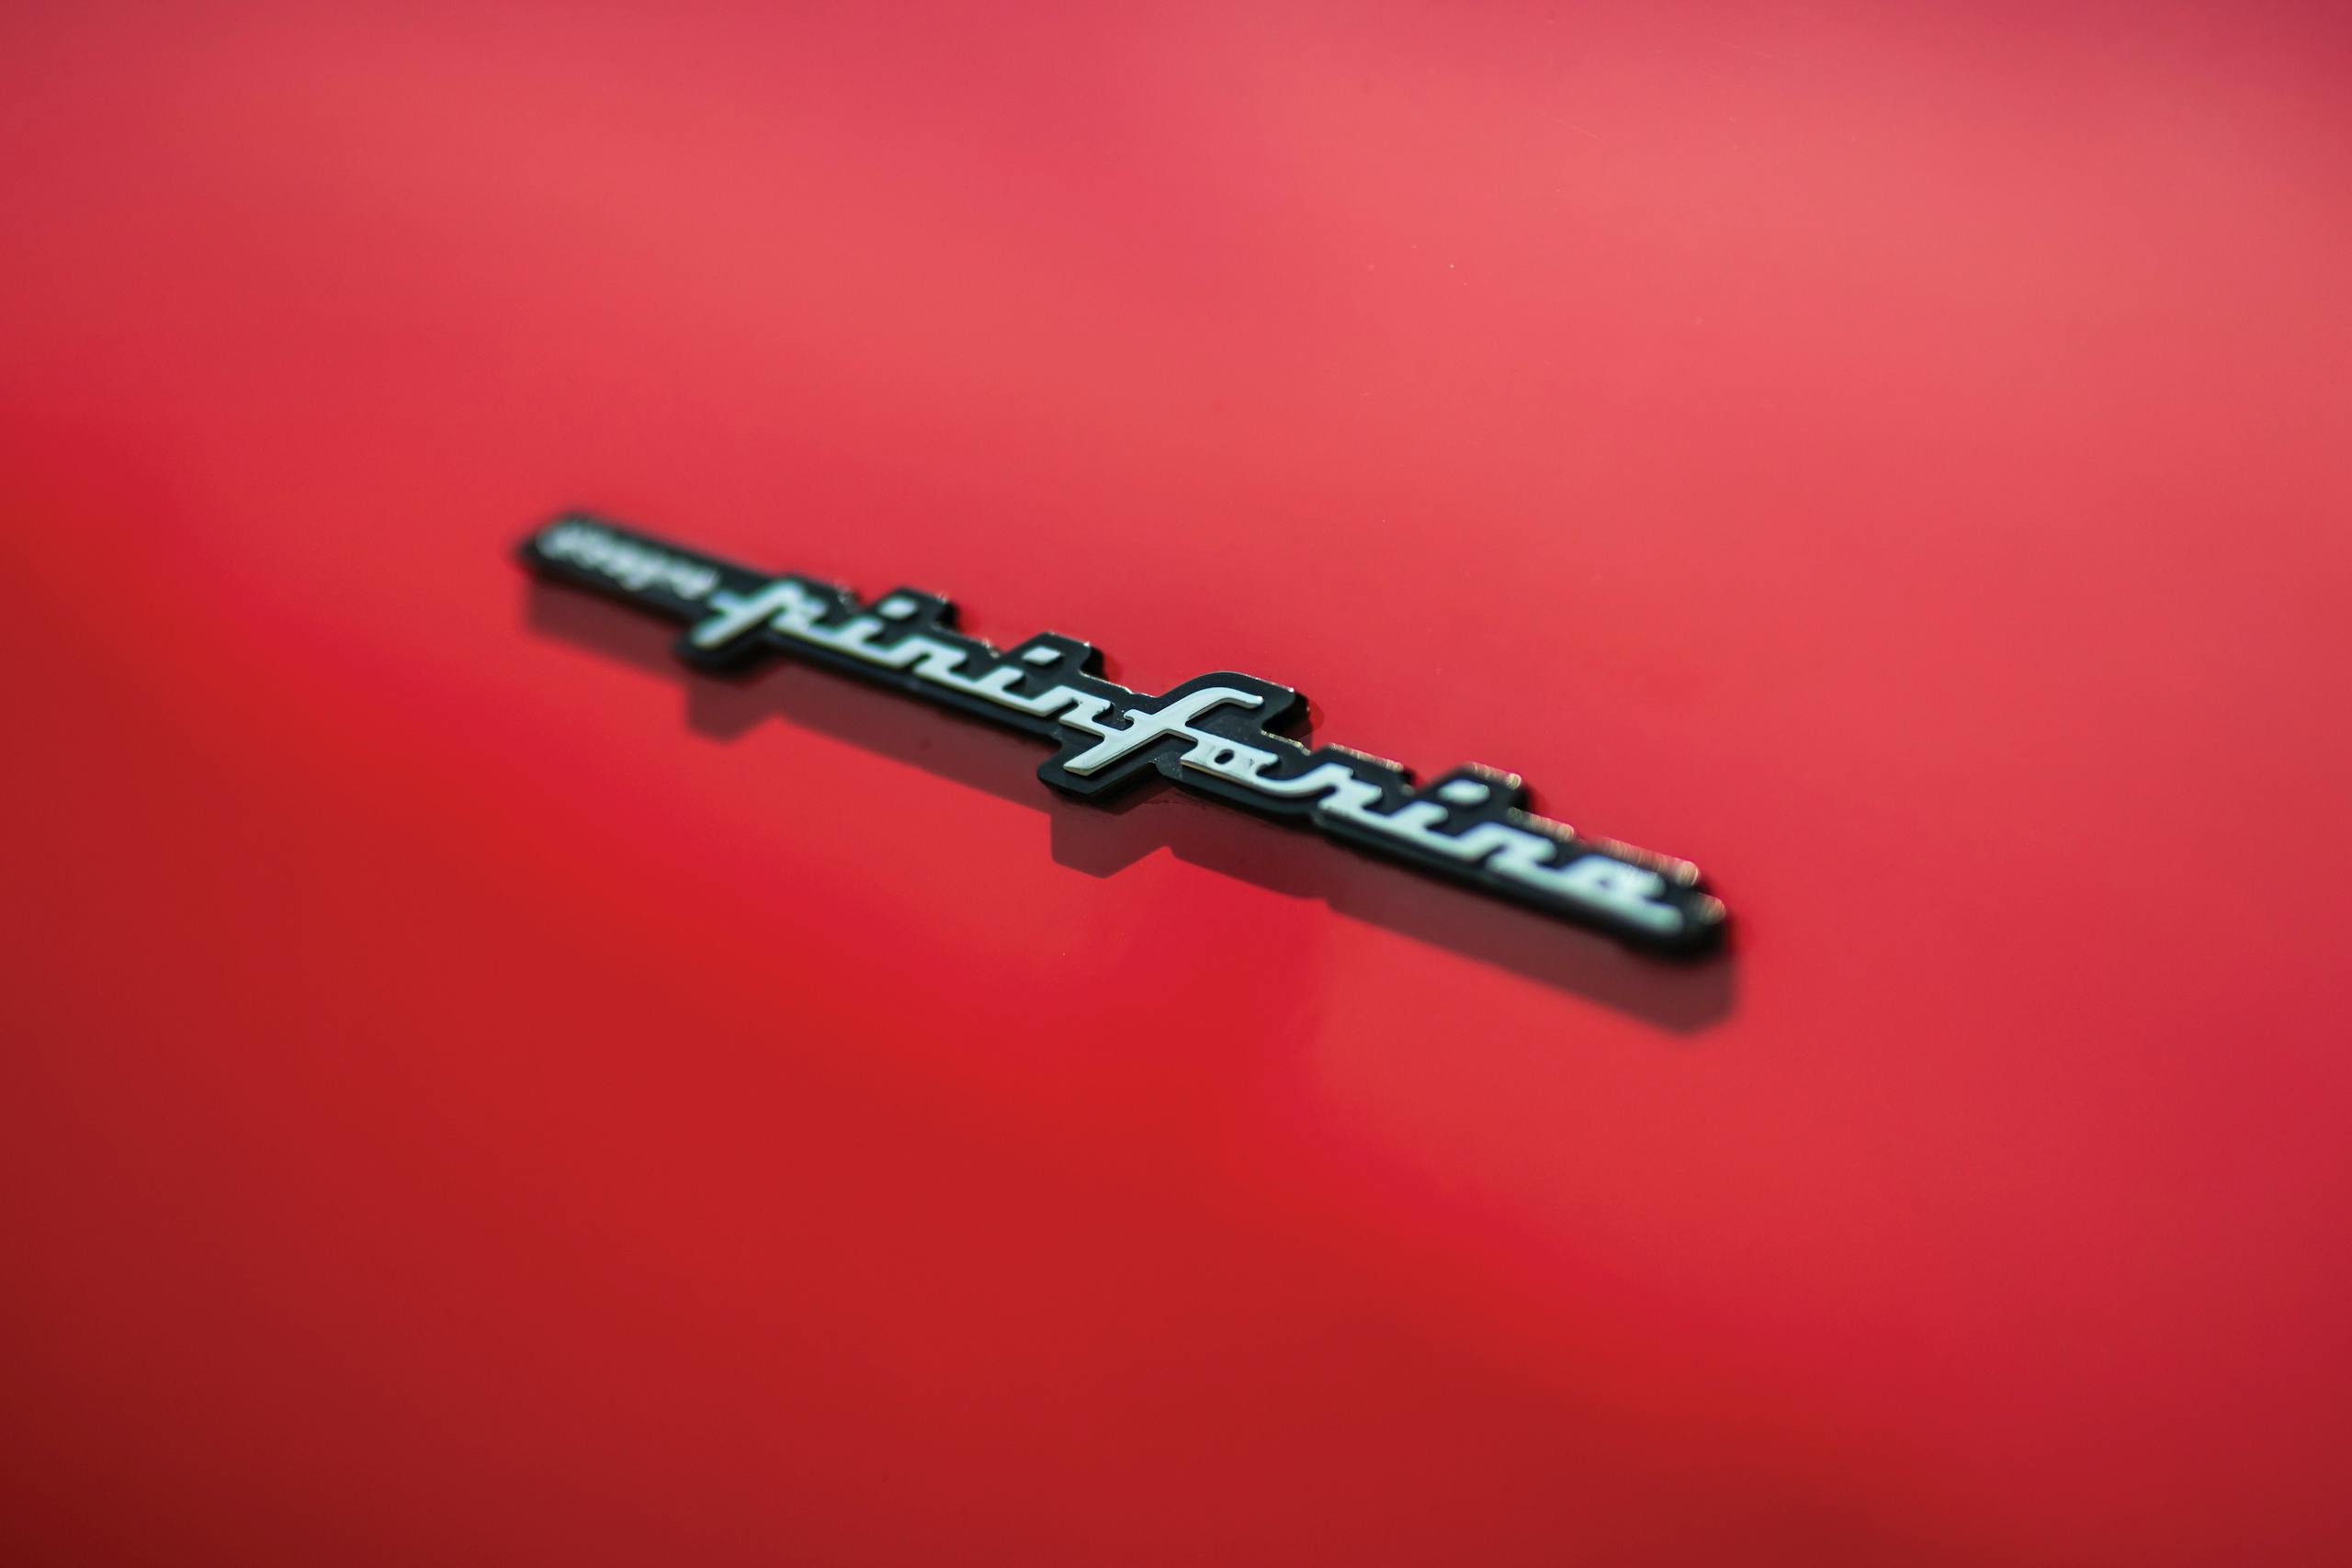 2003 Ferrari Enzo pininfarina badge detail